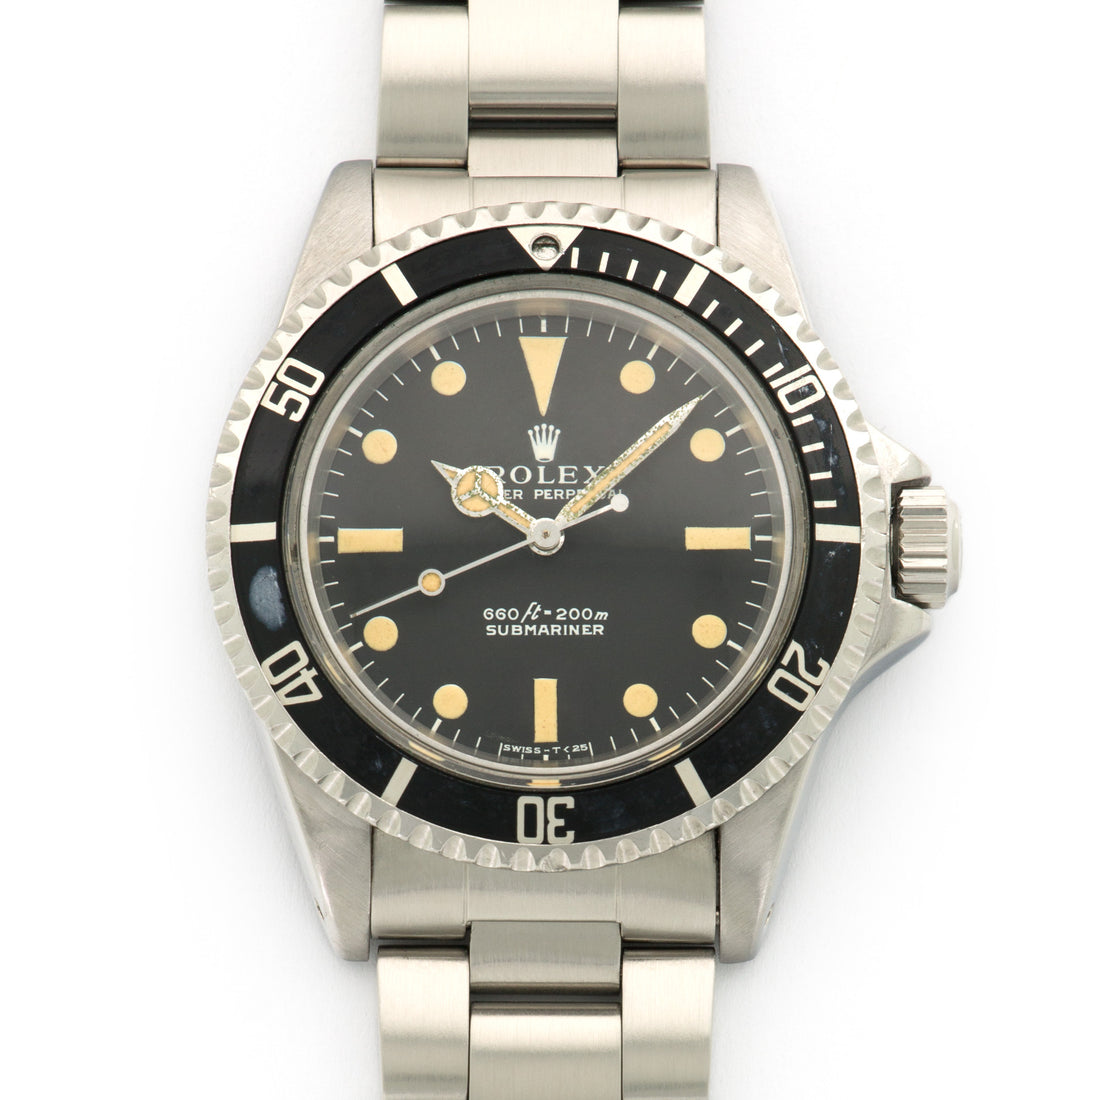 Rolex Steel Submariner Non-Comex Gas Escape Watch Ref. 5514